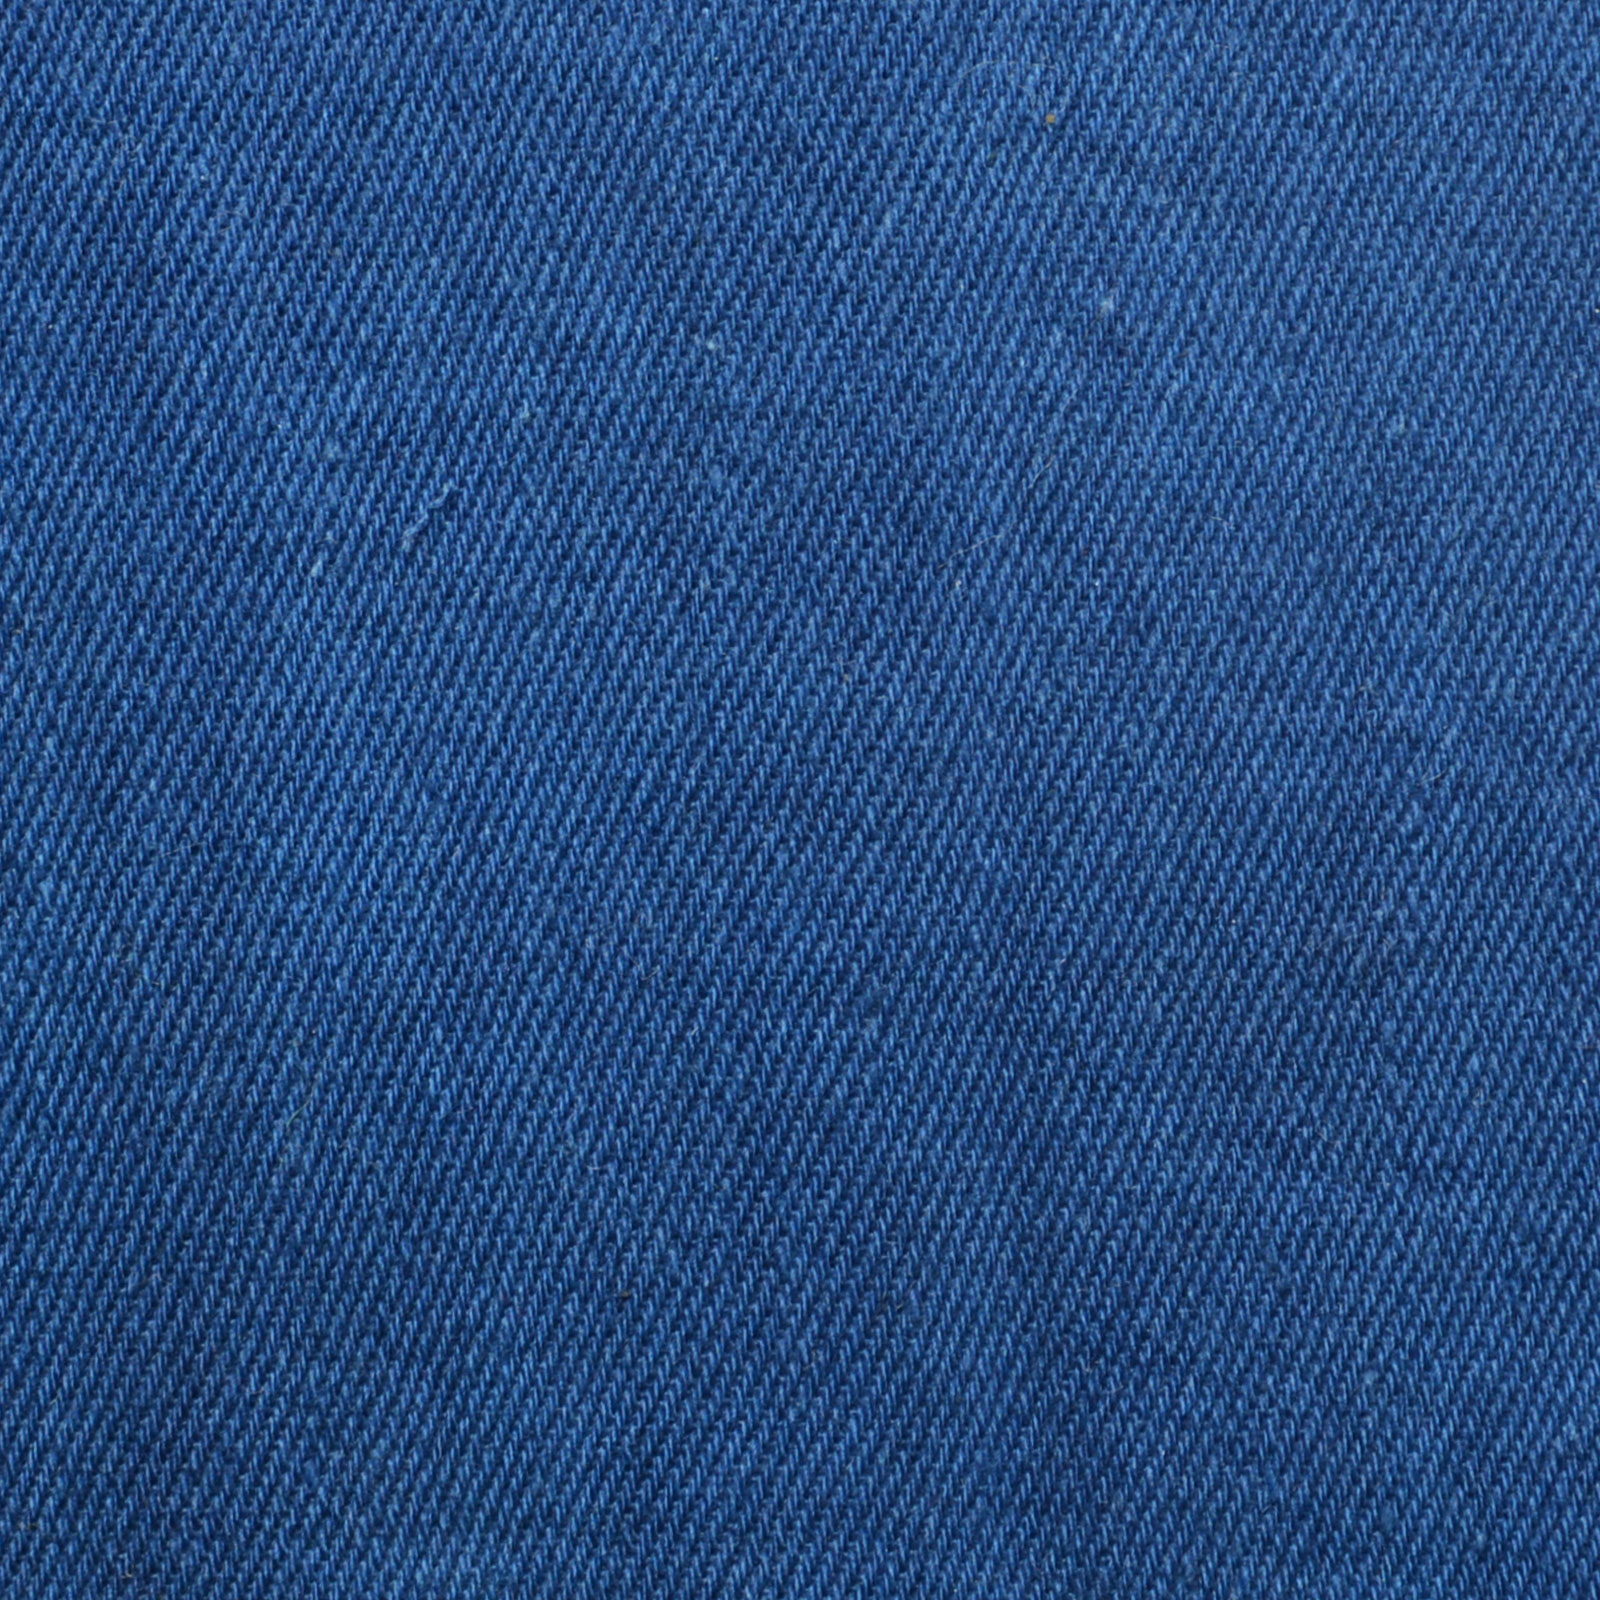 Medium Weight Handloom Selvedge Denim 6.5 Oz - Oxford Blue - Natural Indigo - Fabric Dyed